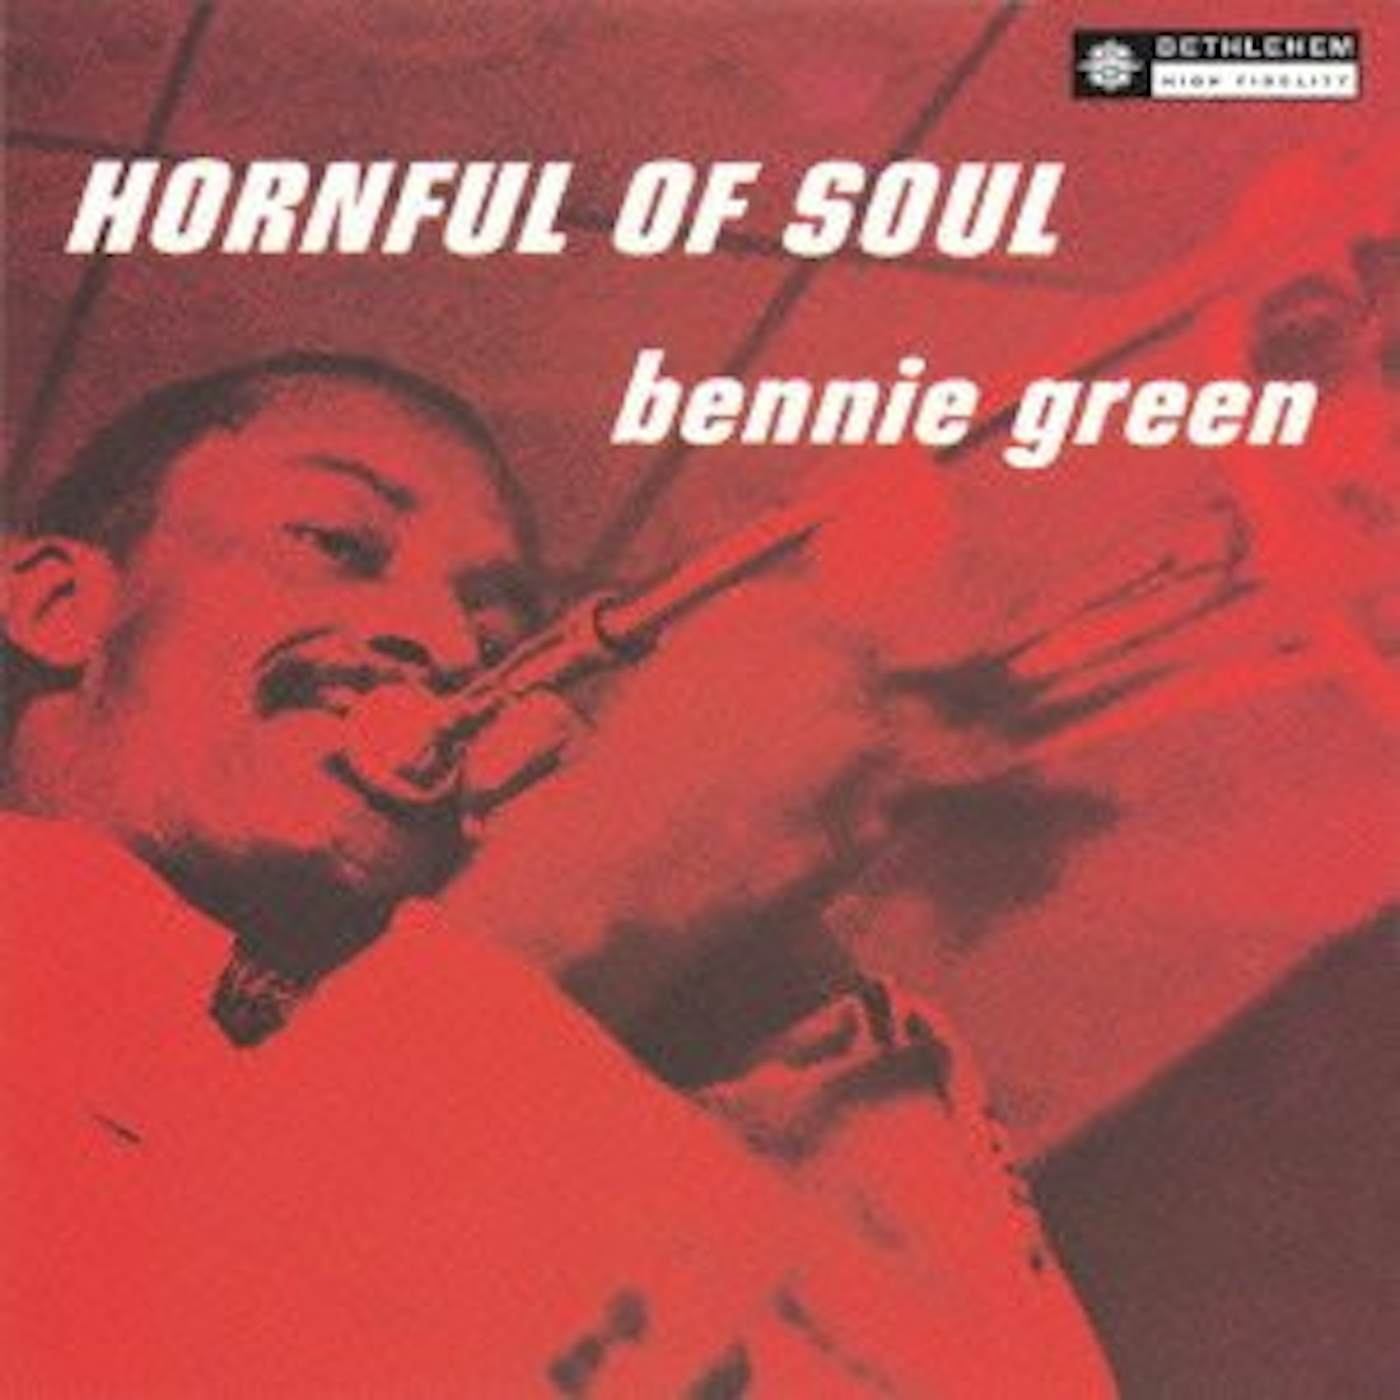 Benny Green HORNFUL OF SOUL CD